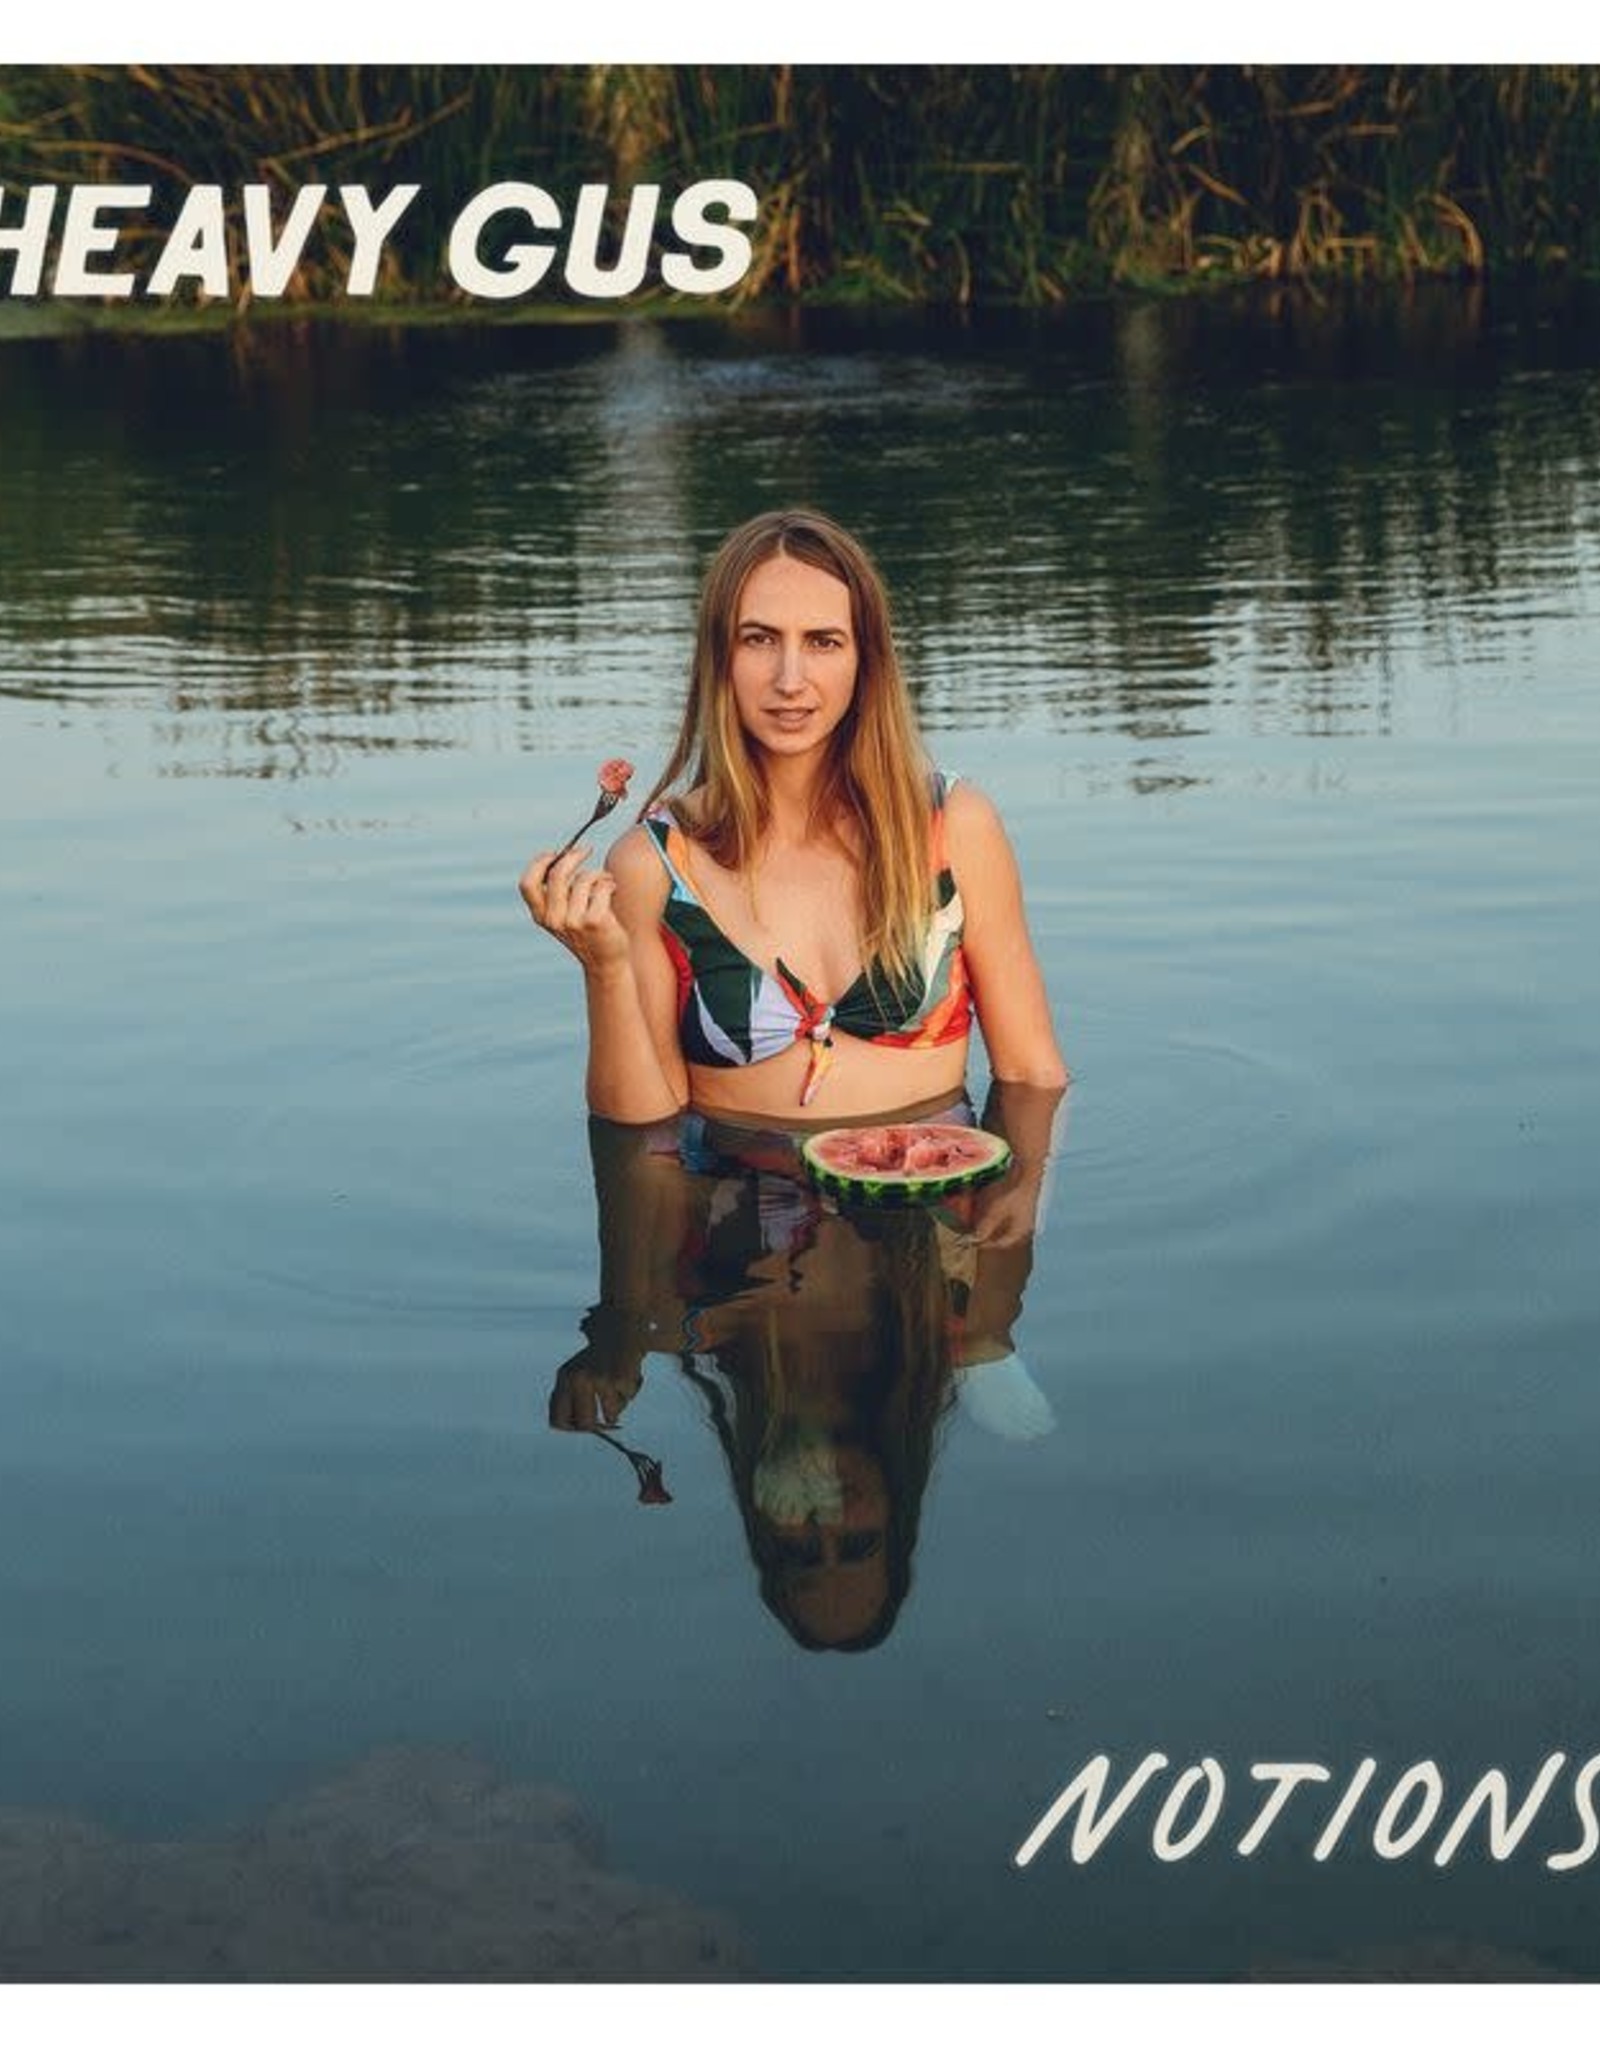 Heavy Gus  - Notions